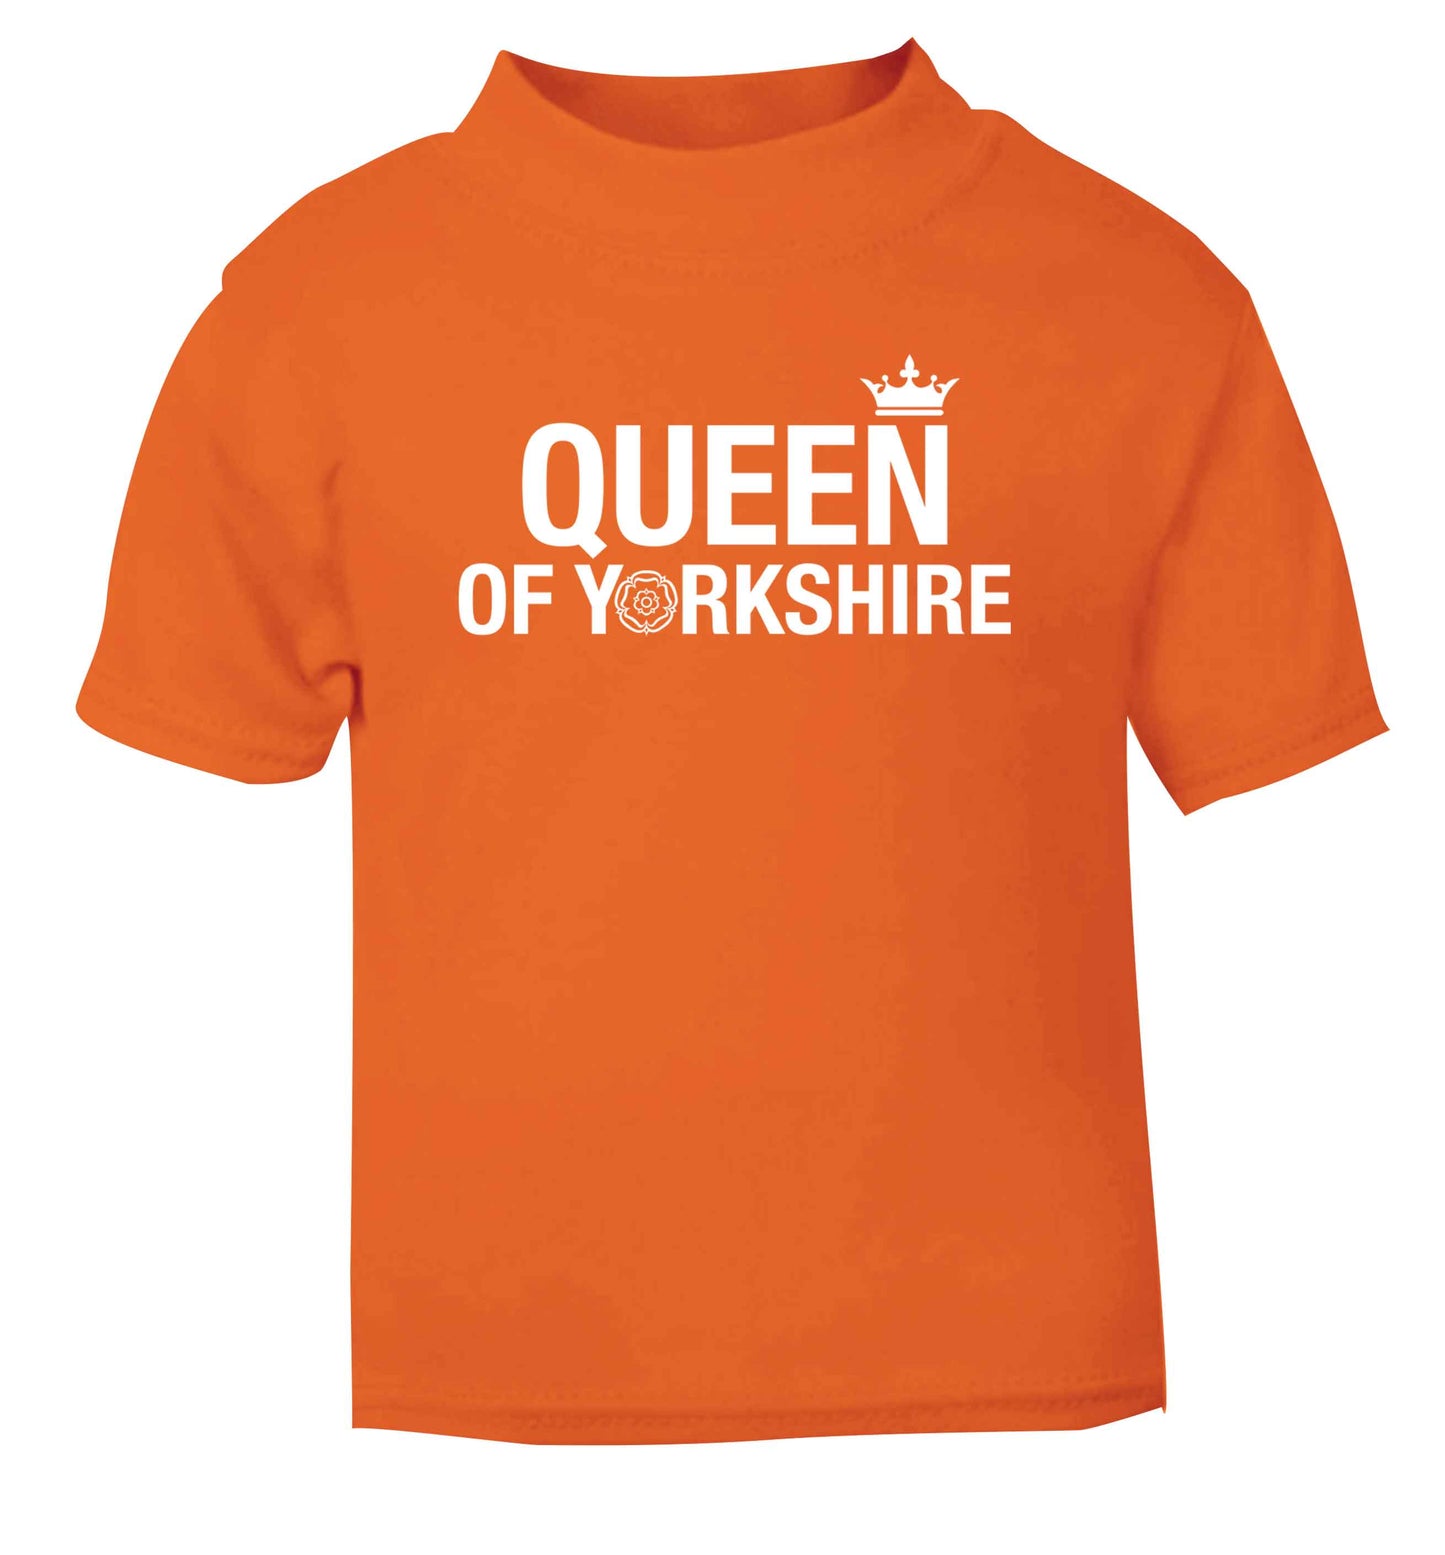 Queen of Yorkshire orange Baby Toddler Tshirt 2 Years